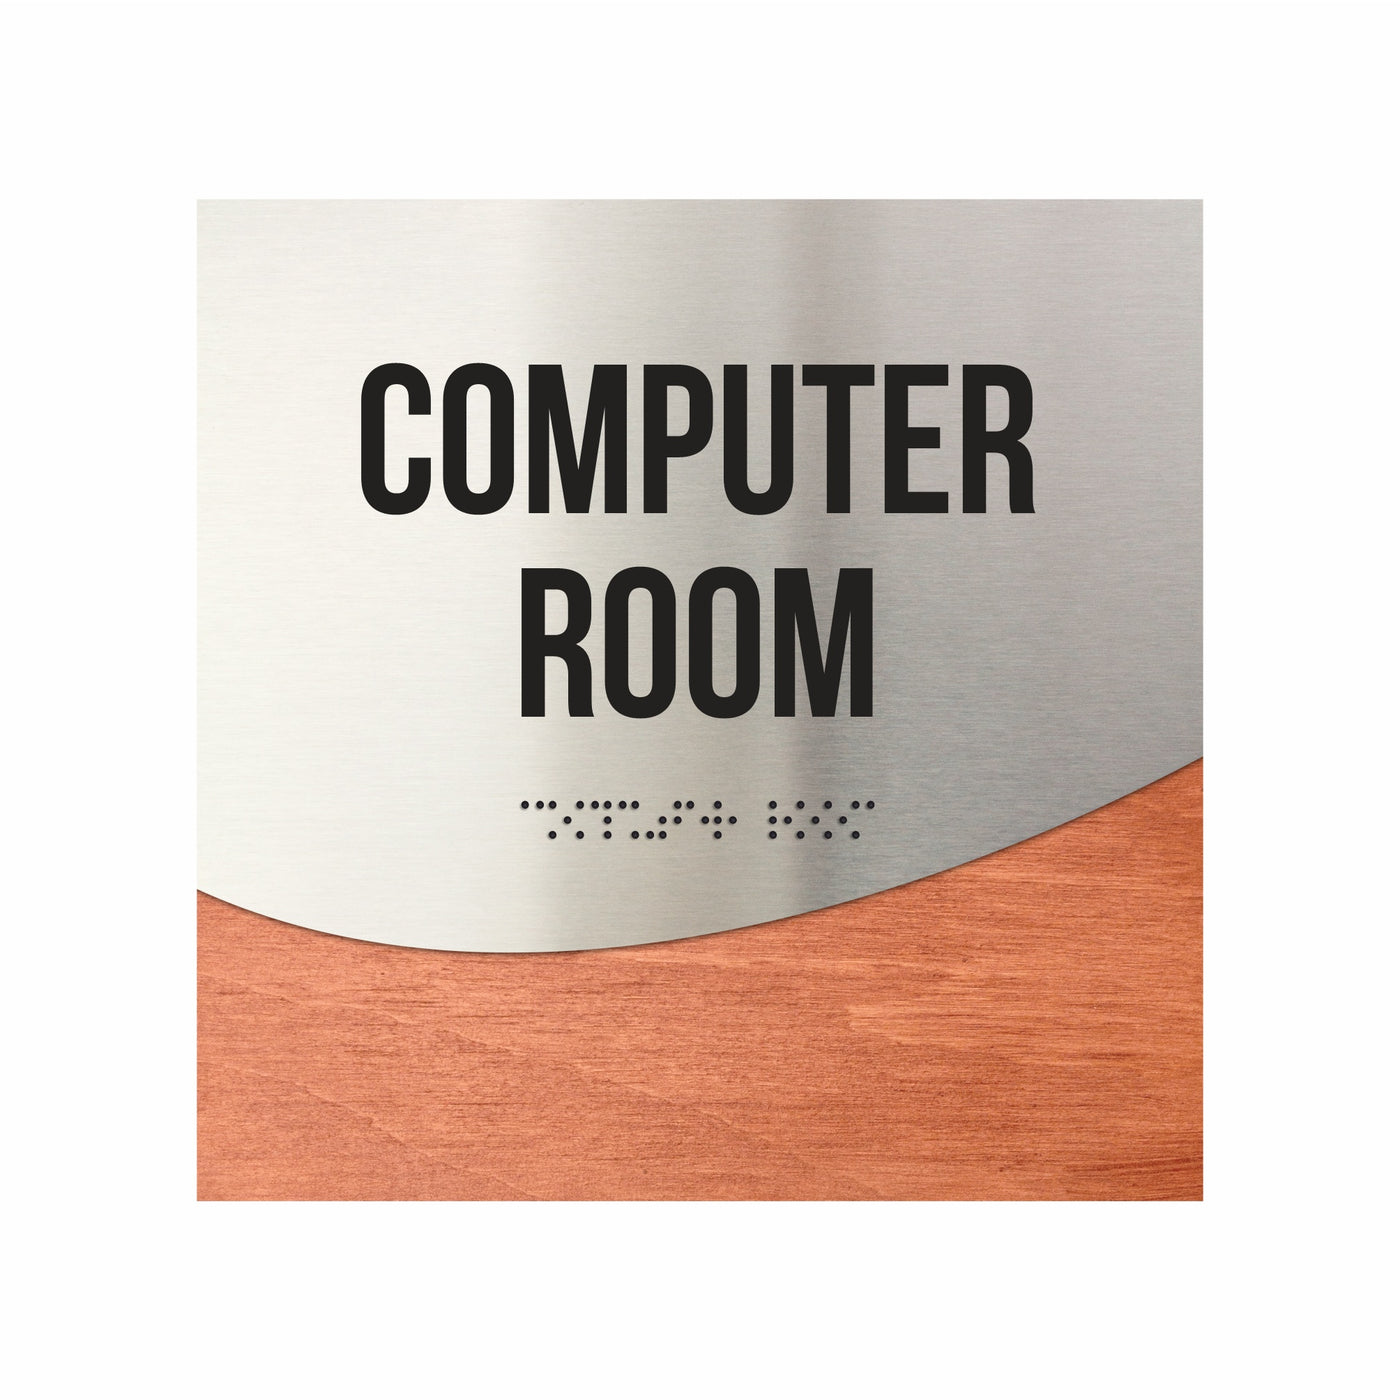 Computer Room Sign - Interior Office Door Signs - Stainless Steel & Wood "Jure" Design